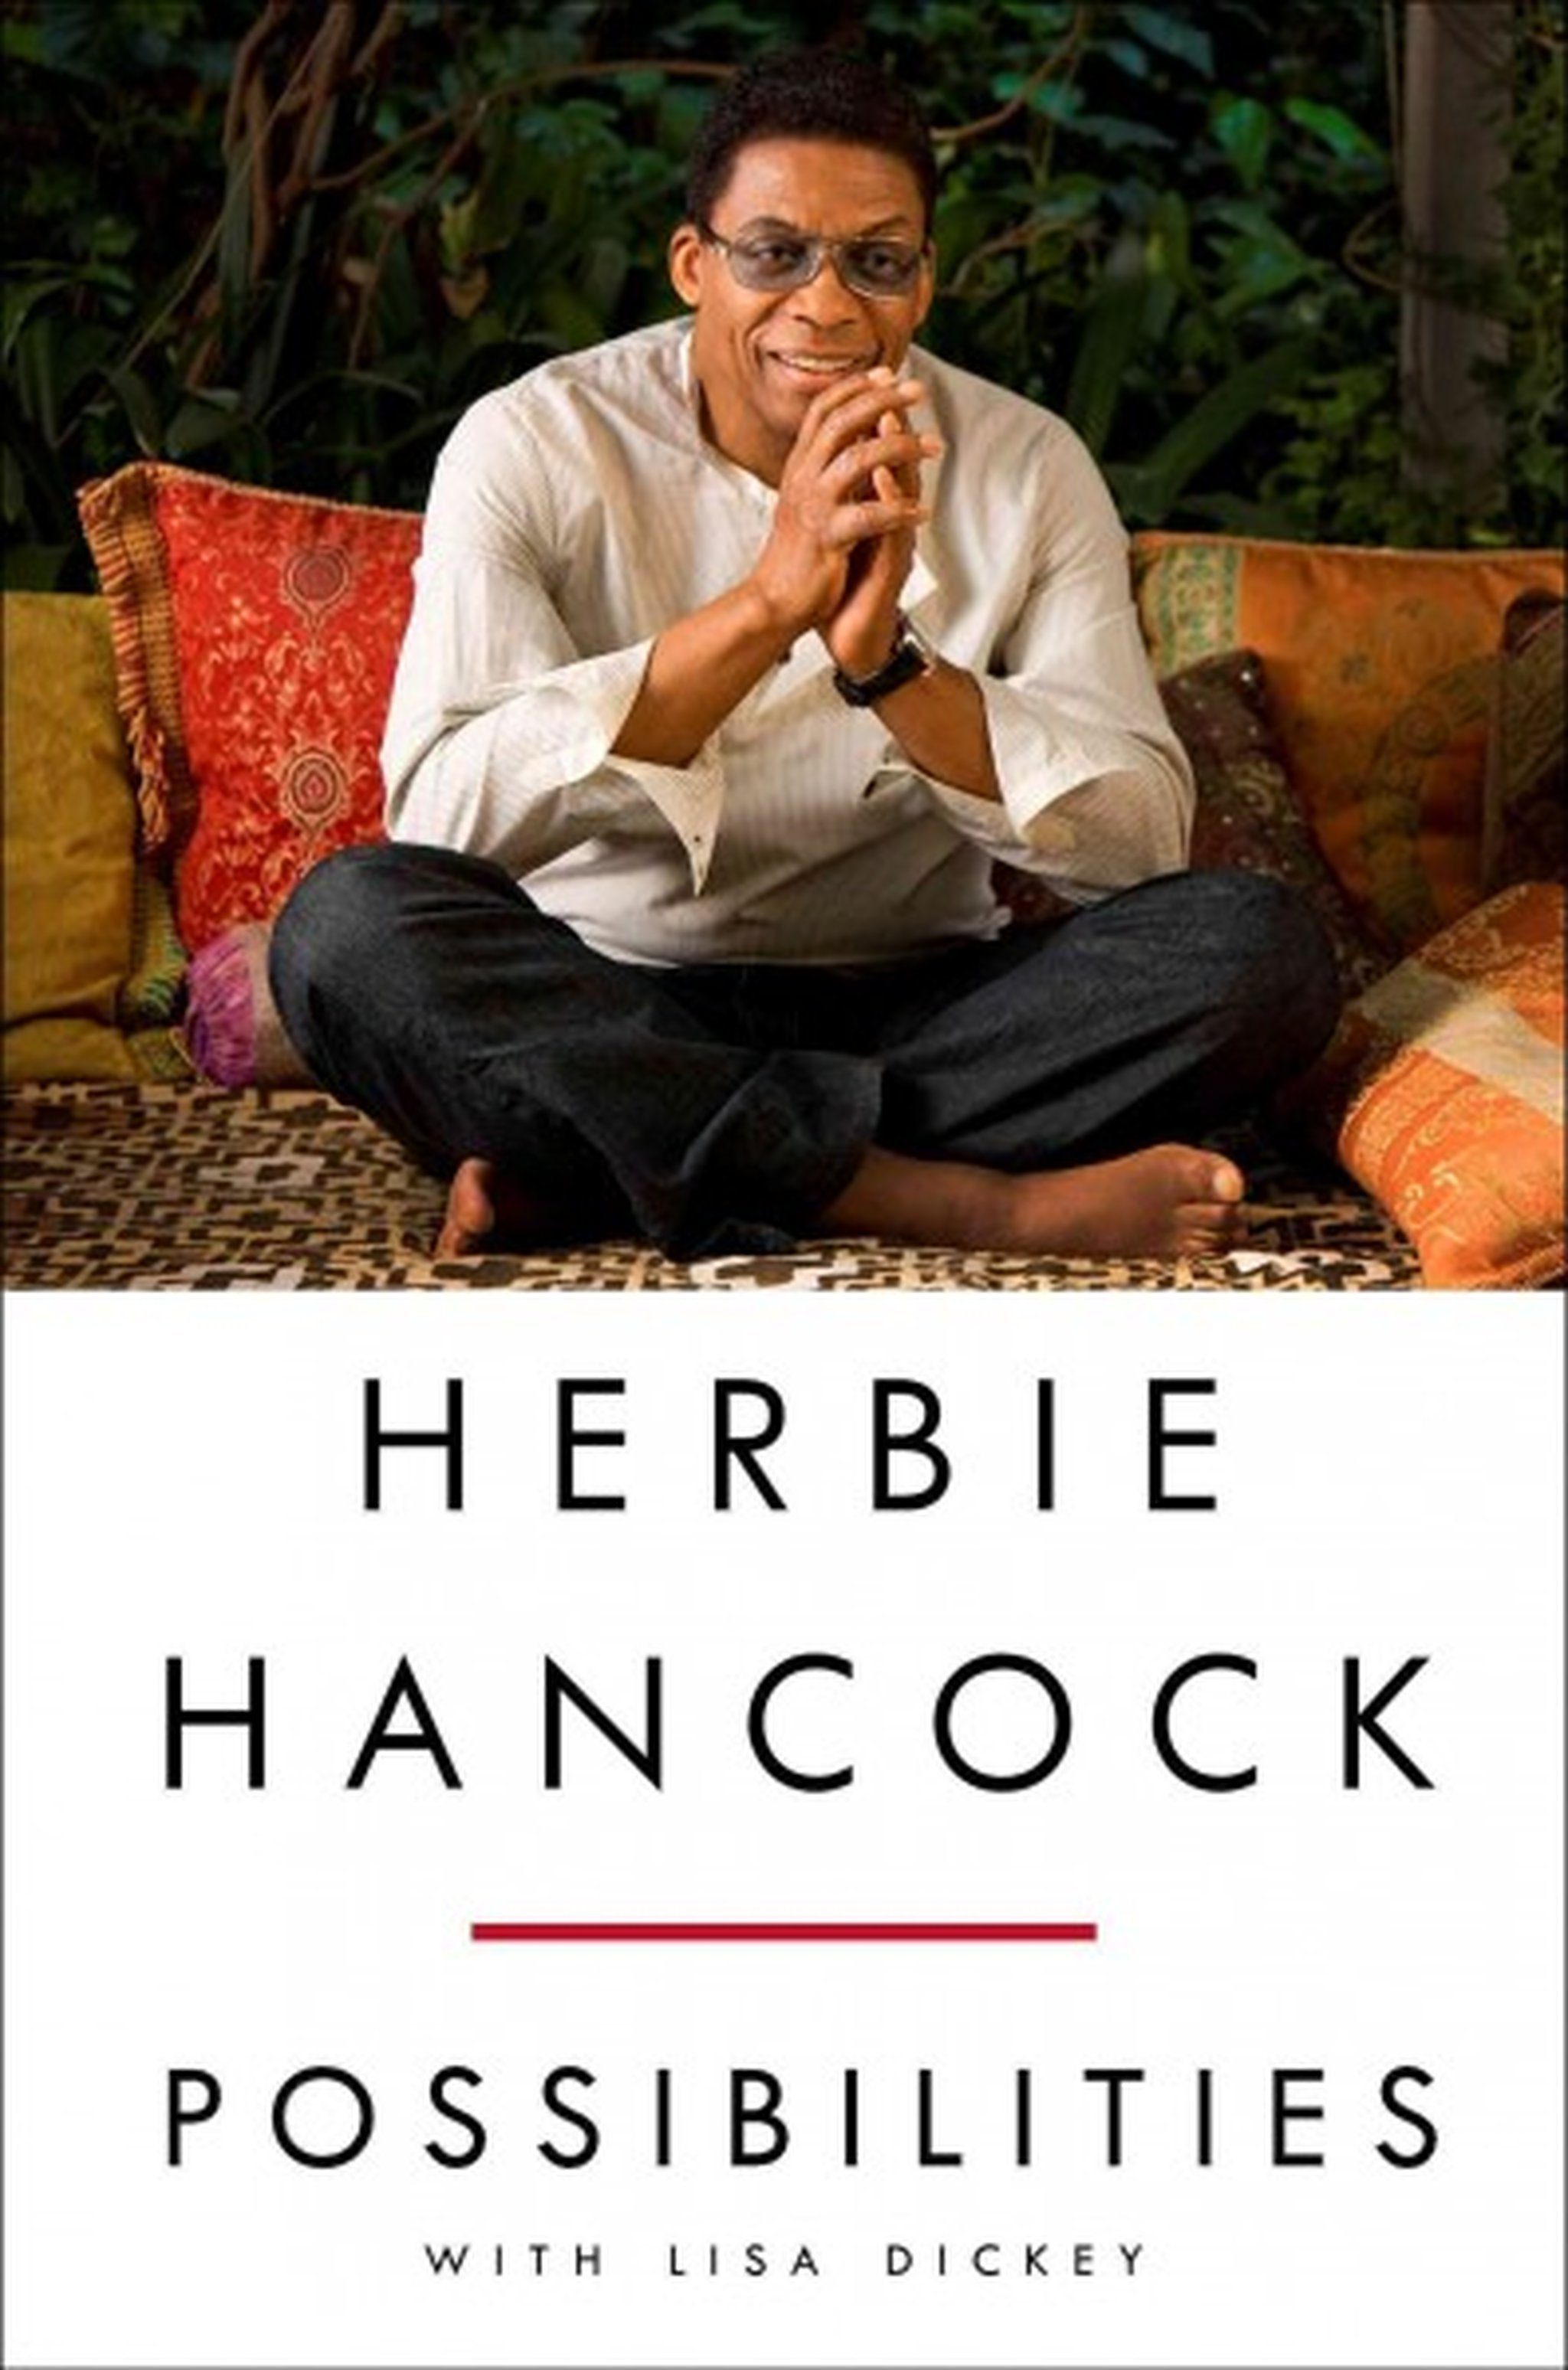 Living Legend Herbie Hancock Discusses His New Memoir